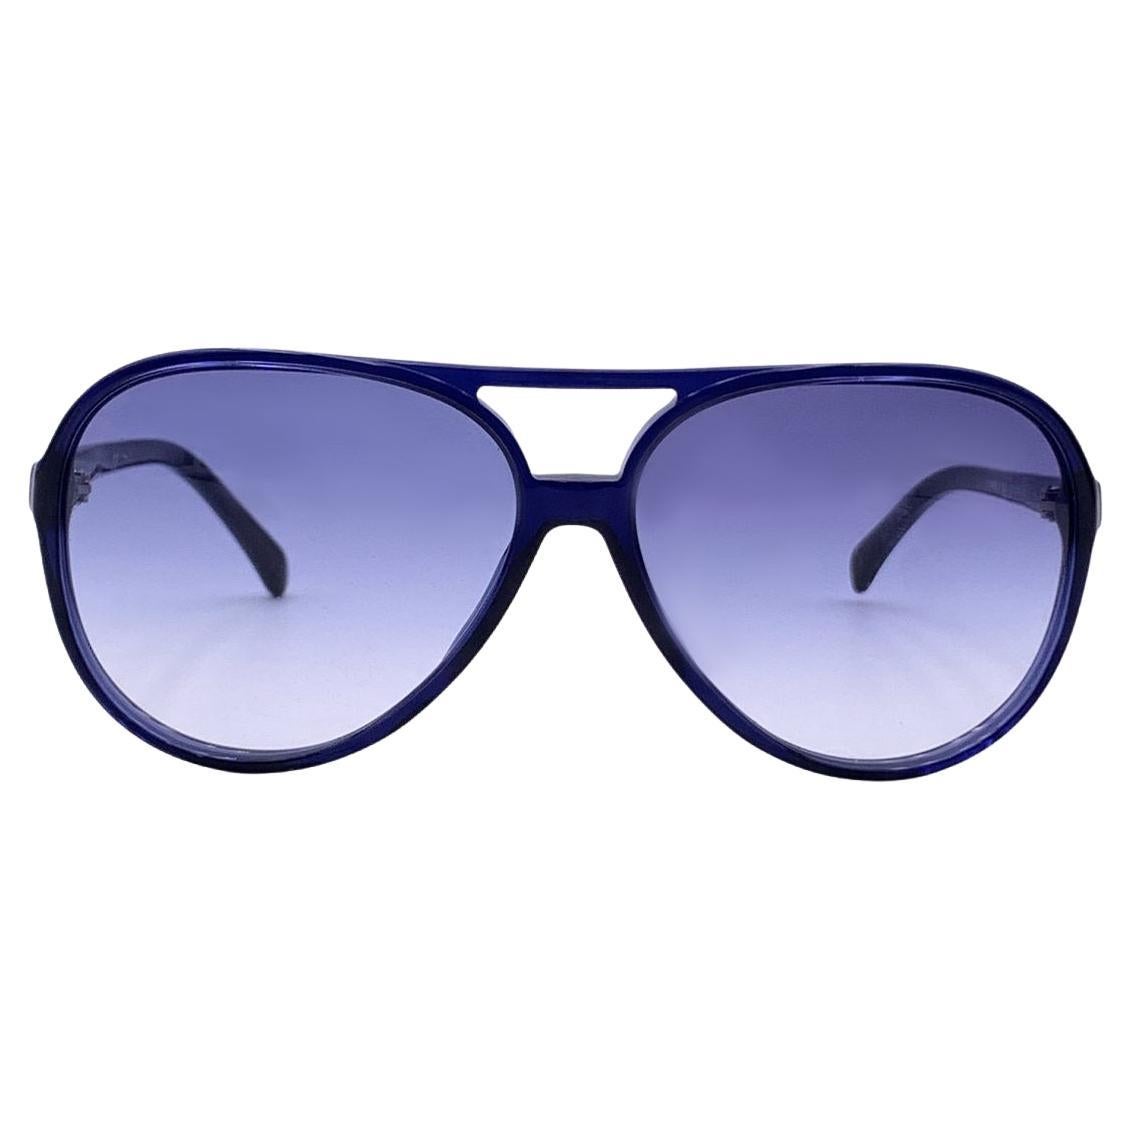 Chanel Blue Acetate Aviator Sunglasses 5206 59/13 135 mm